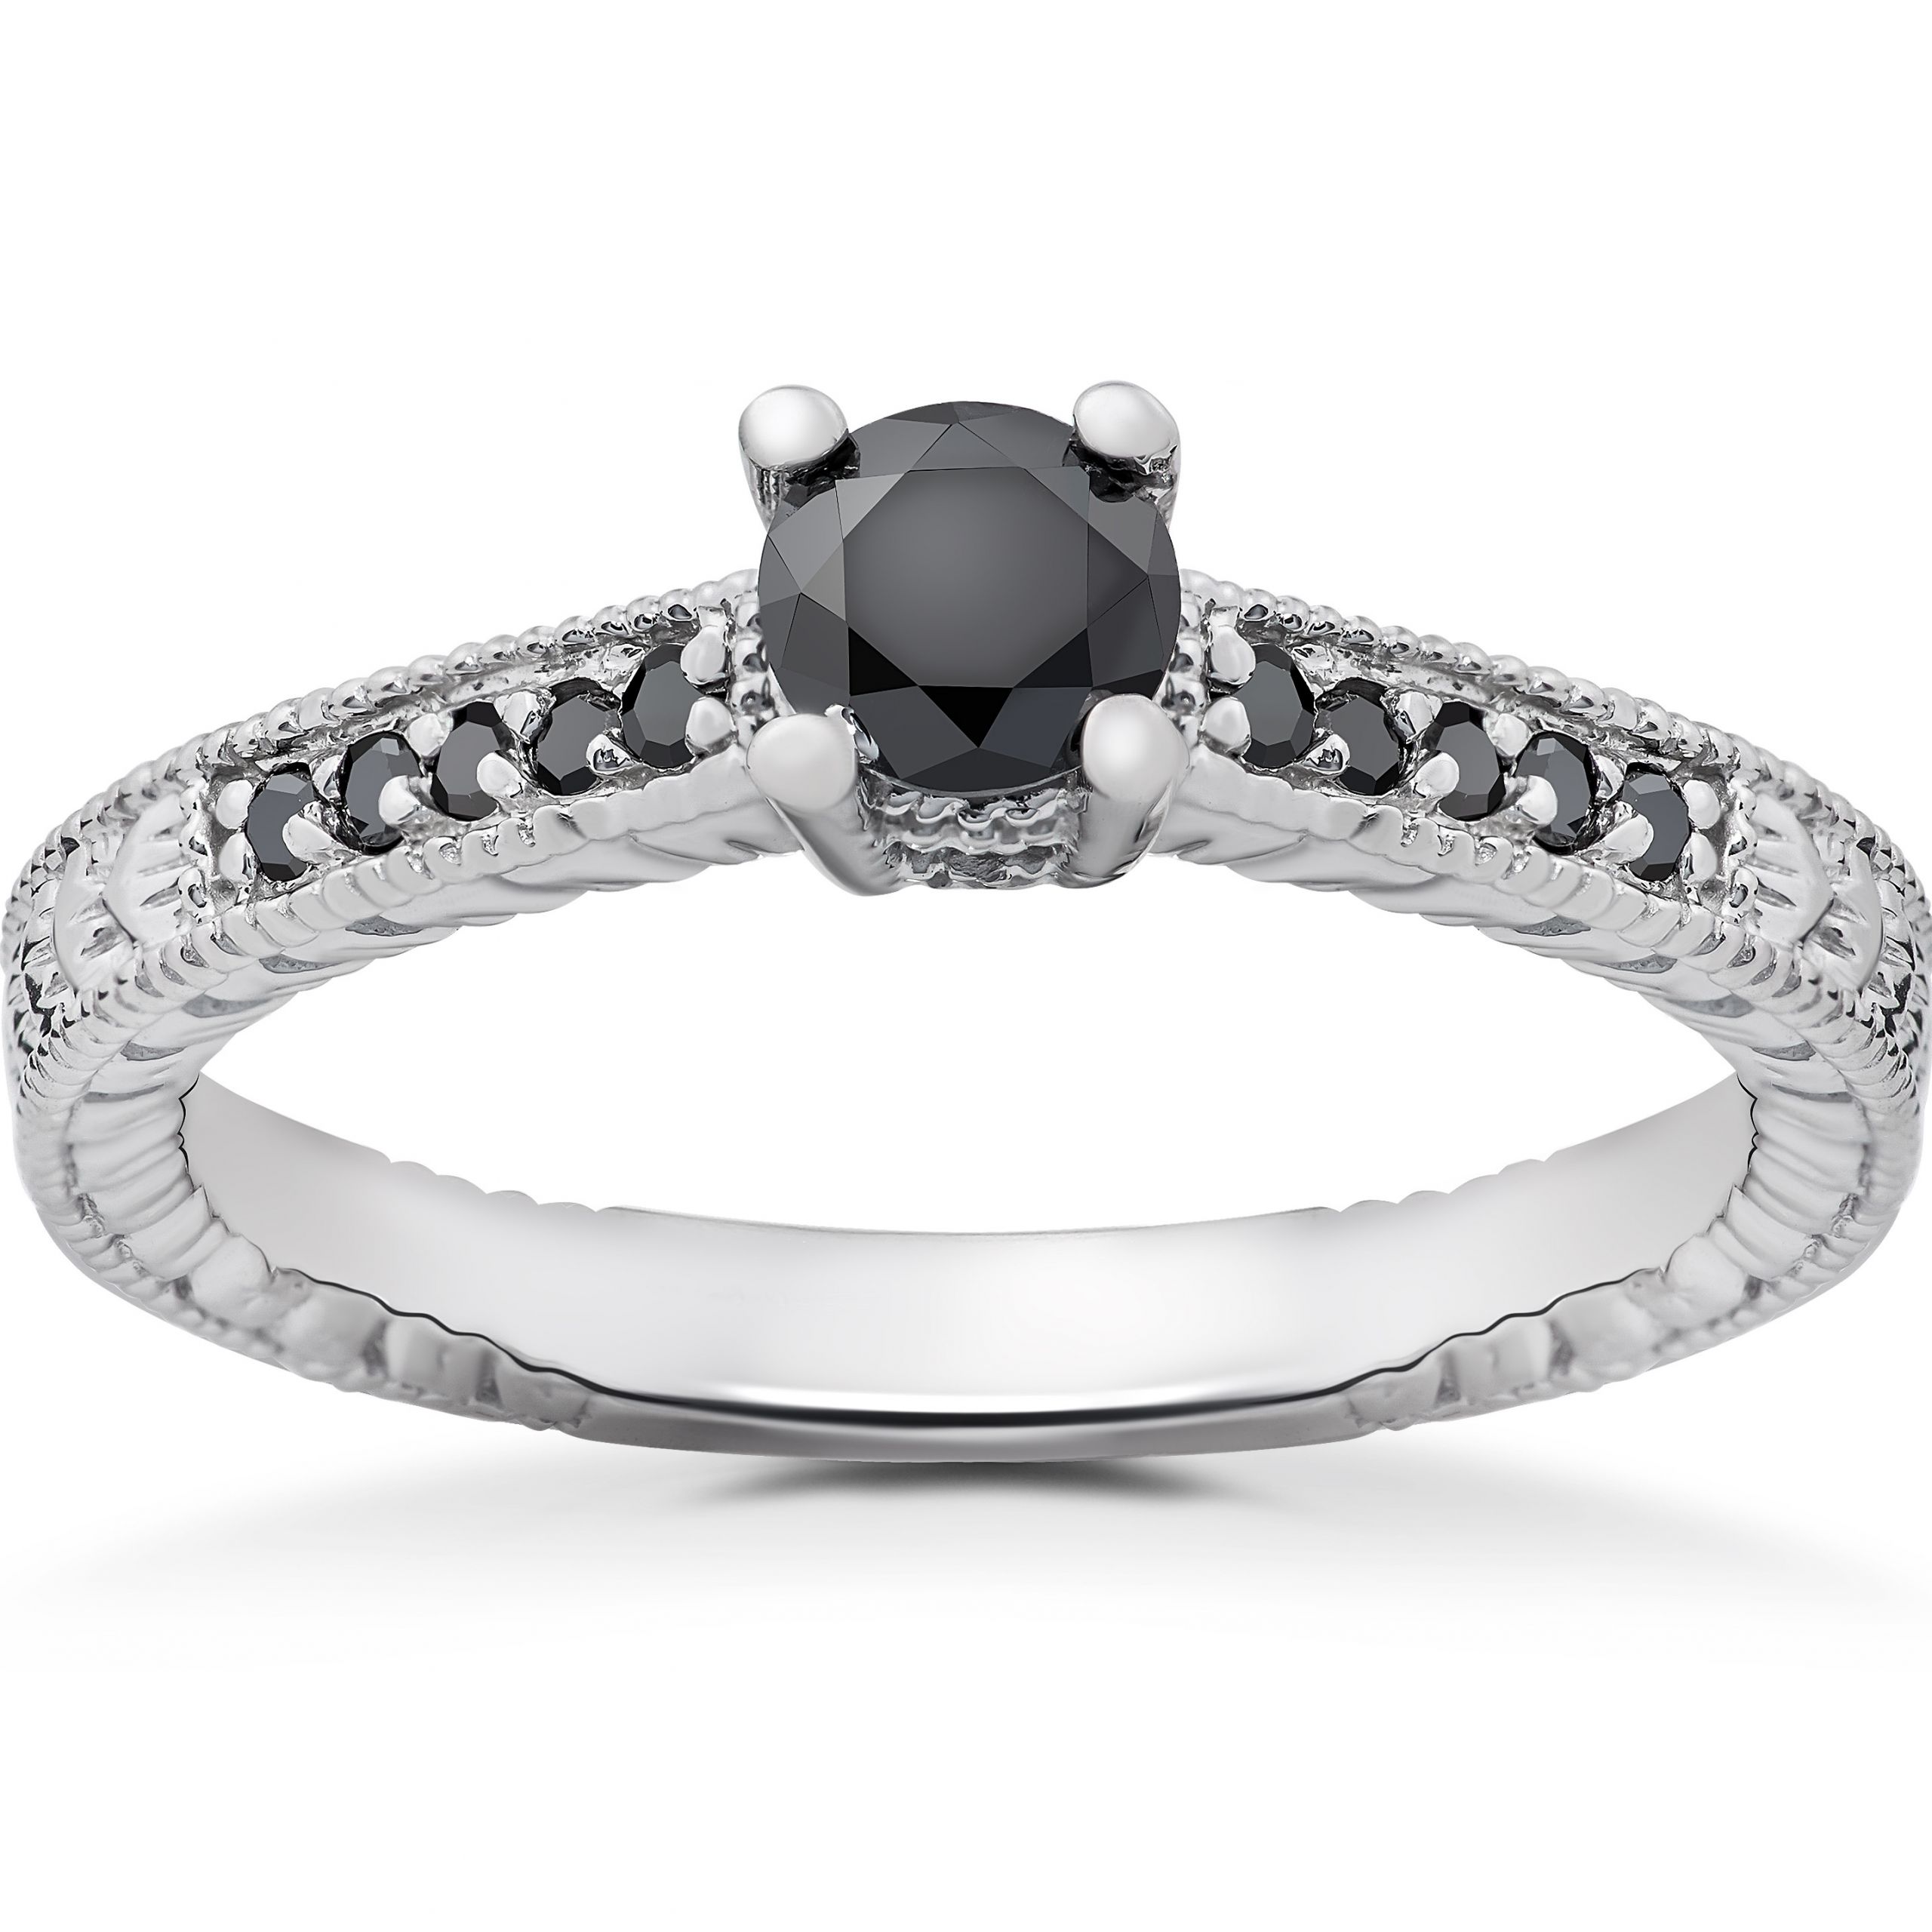 Black Diamond Engagement Rings
 1 2 ct Black Diamond Vintage Engagement Ring 14k White